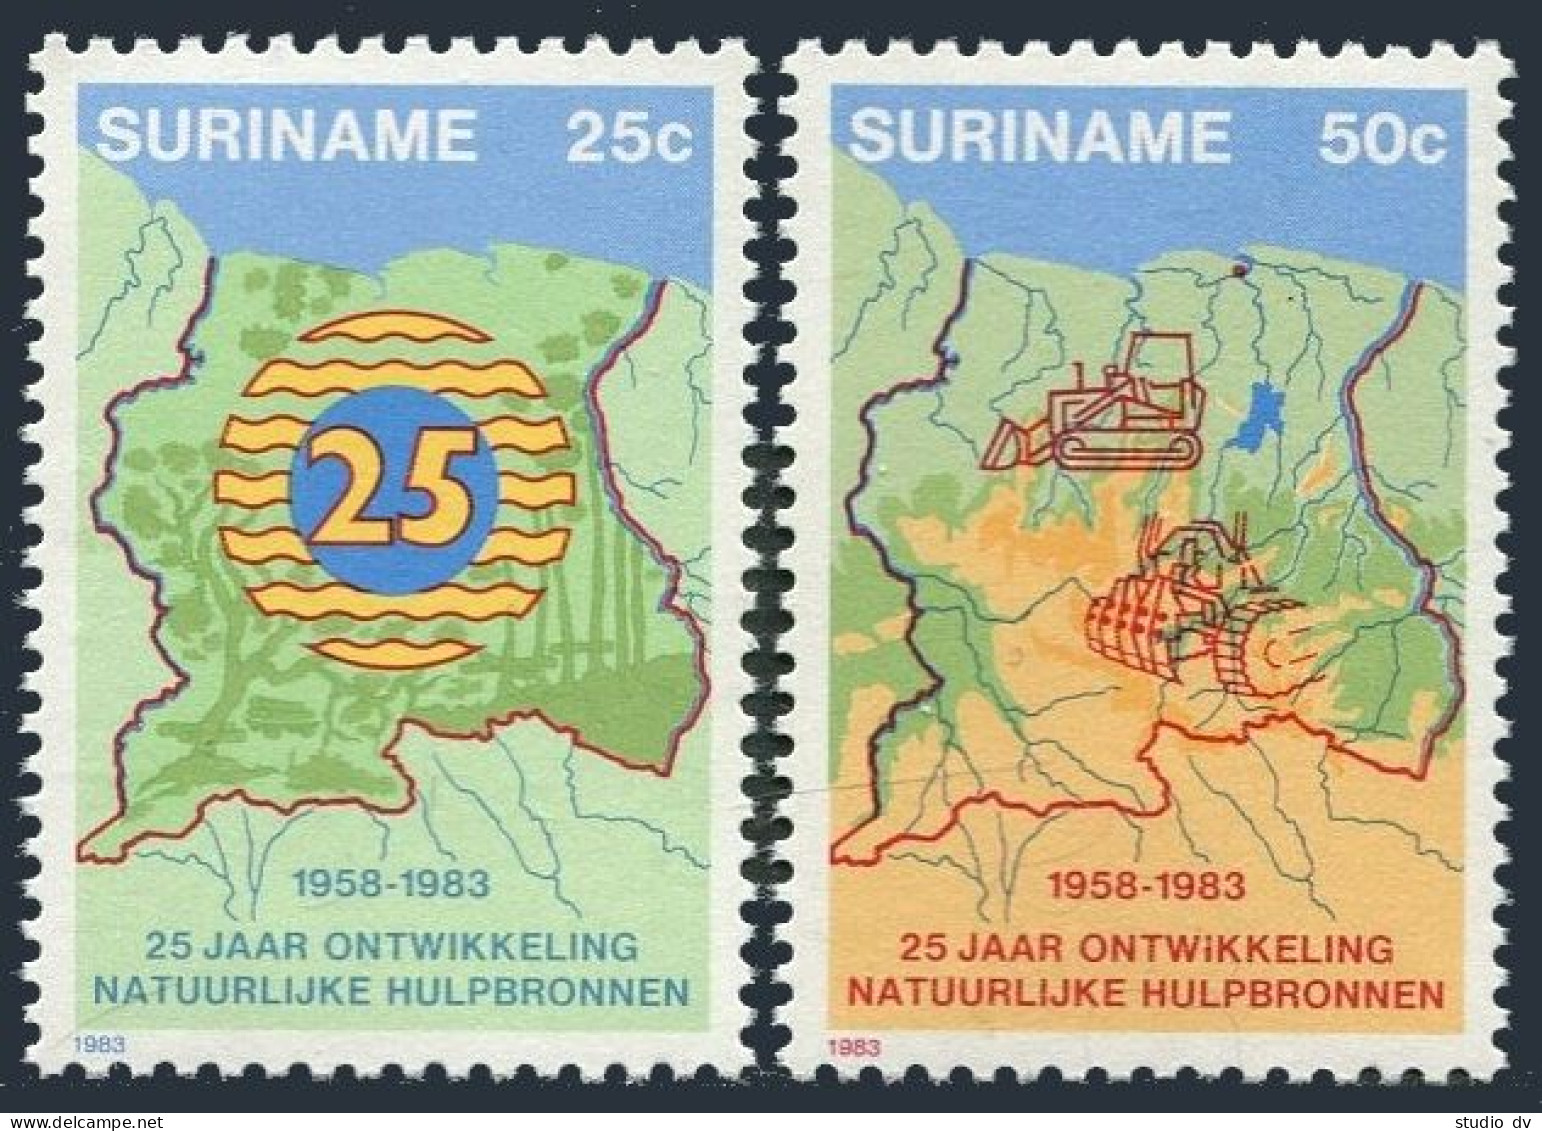 Surinam 641-642,MNH.Michel 1038-1039. Department Of Construction,25th Ann.Map. - Surinam